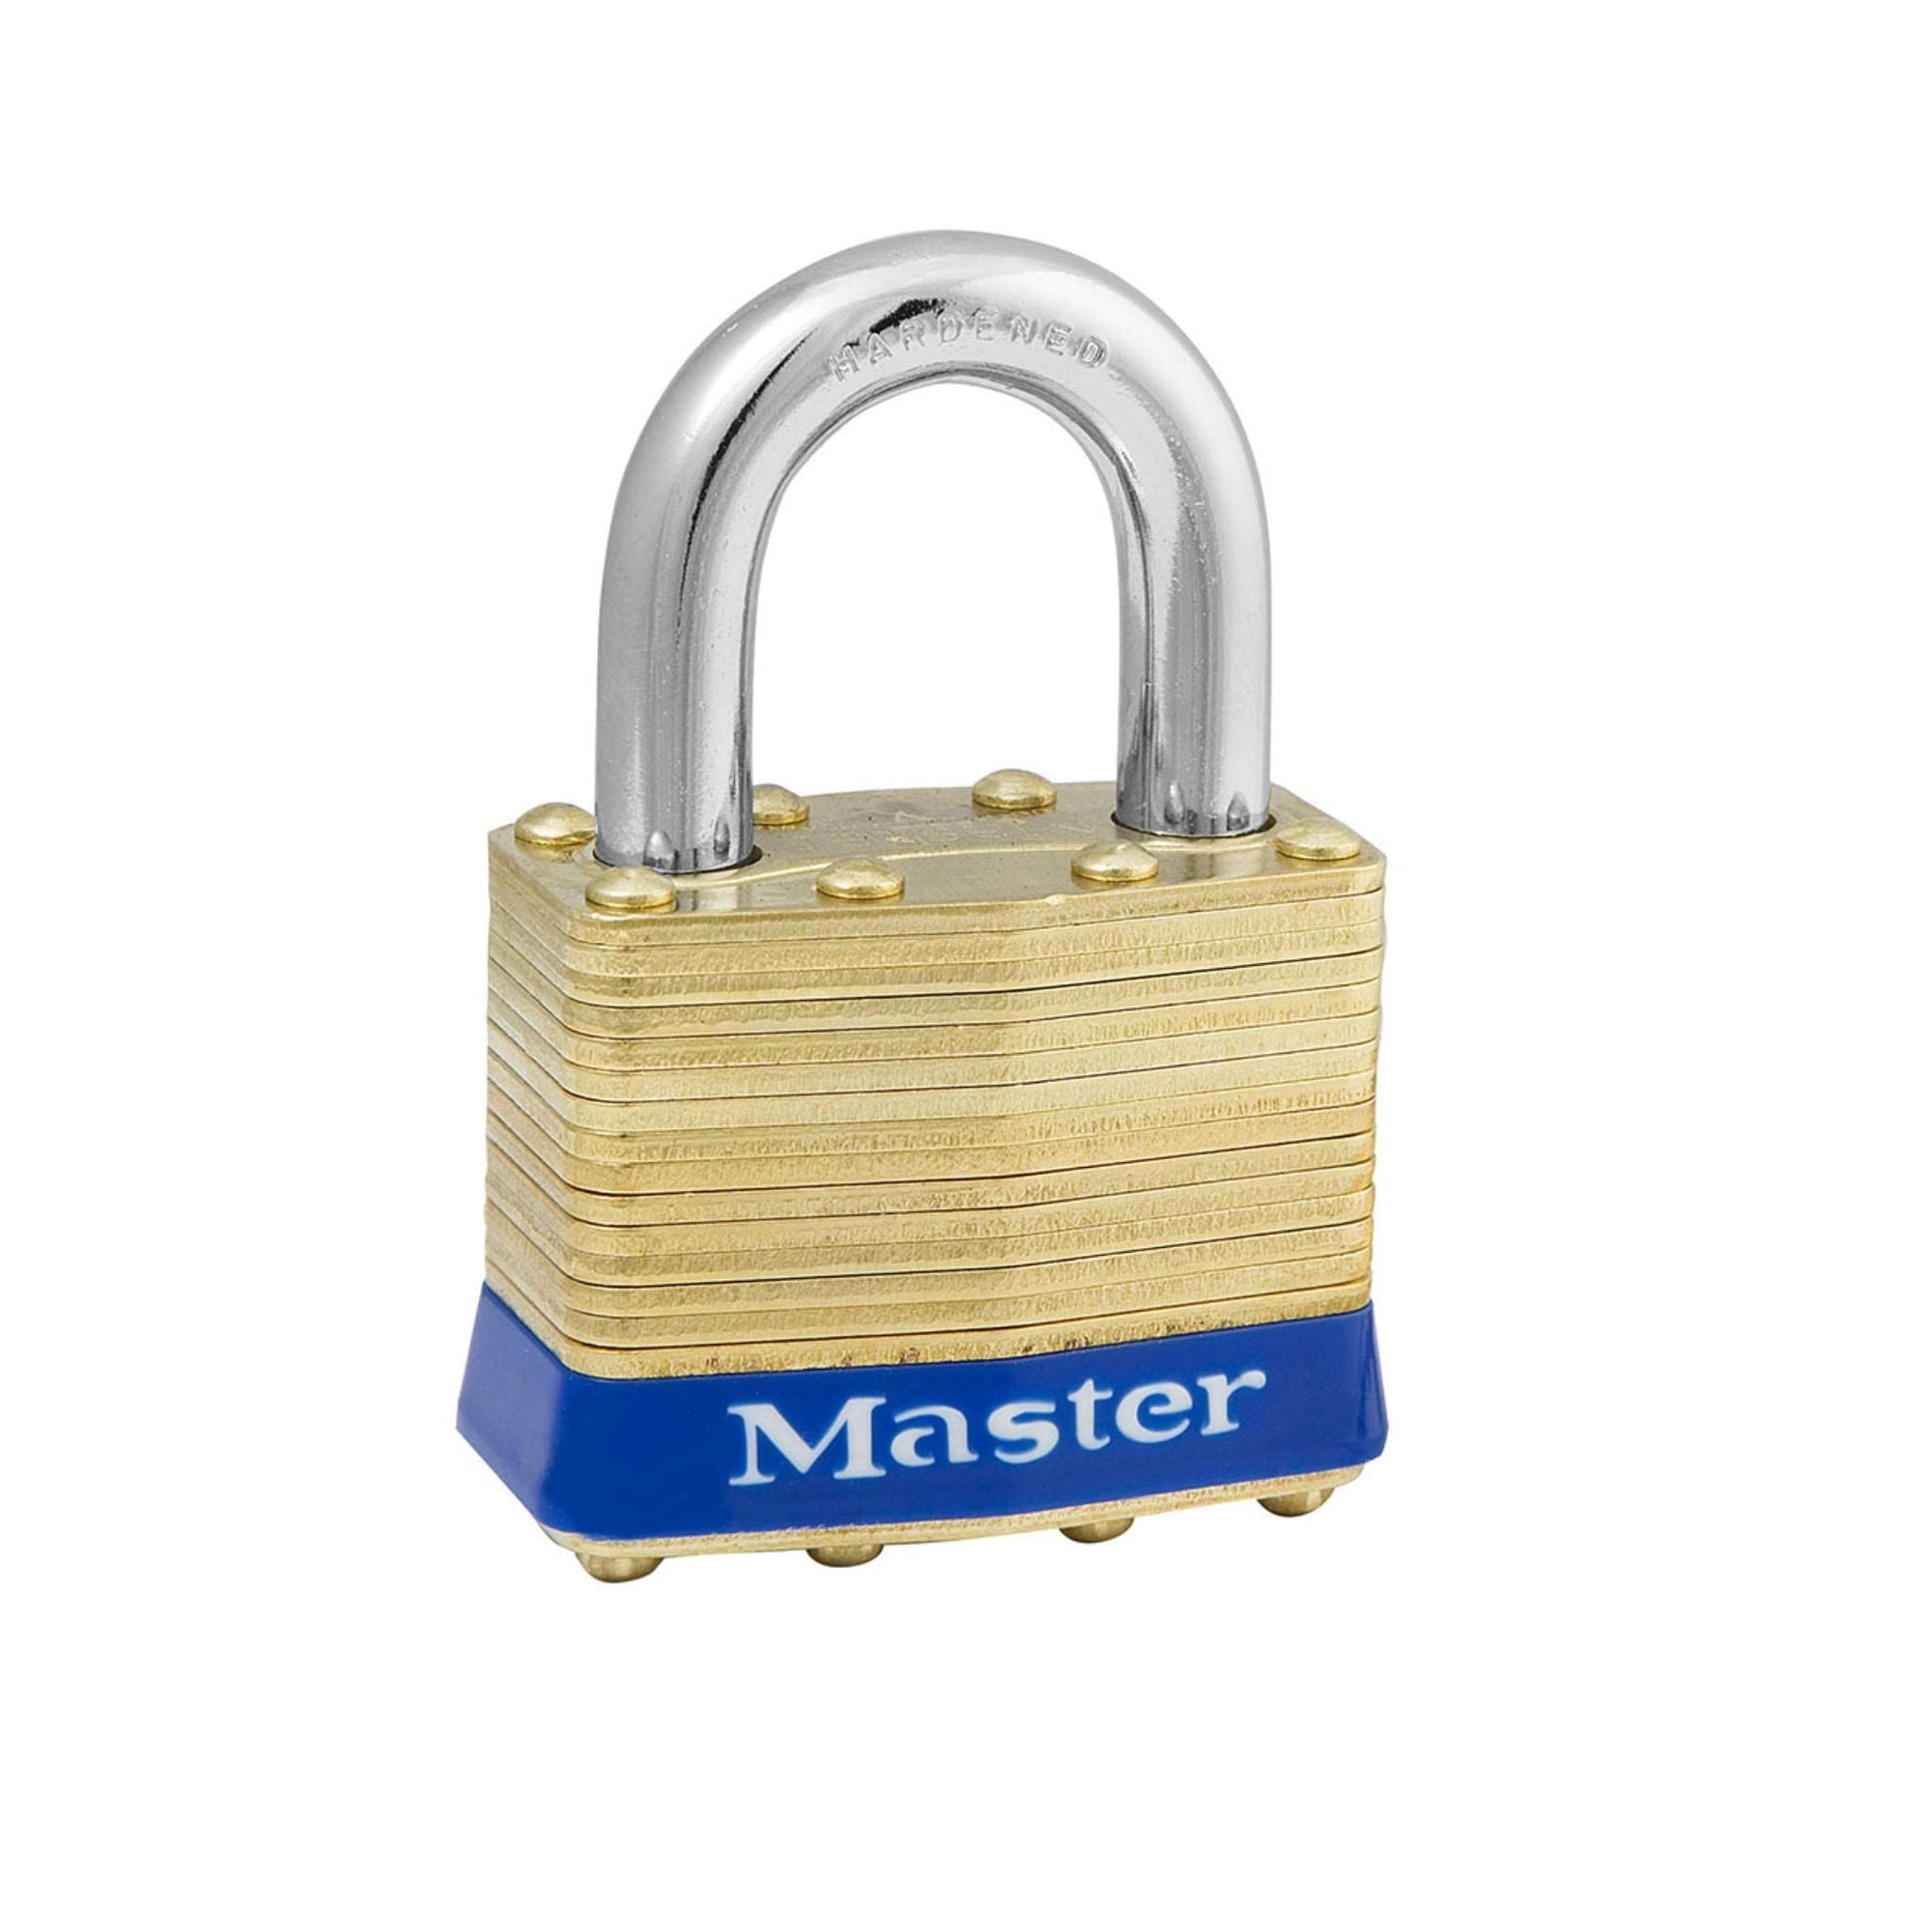 Master Lock 2KA 0318 Lock Laminated brass No. 2 Series Padlock Keyed to Match Existing Key Number KA0318 - The Lock Source